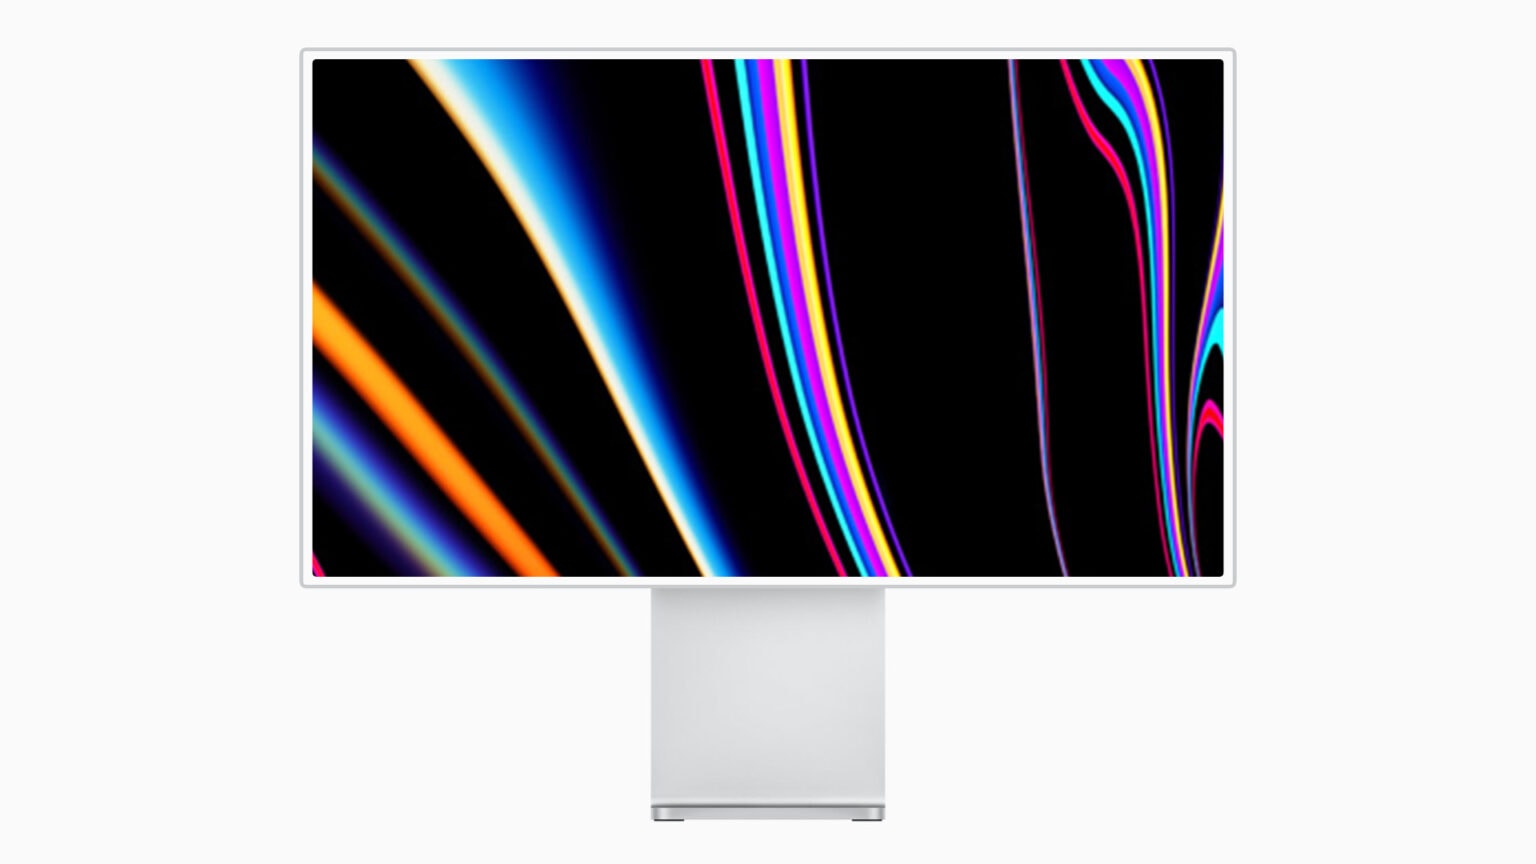 Apple's next desktop monitor